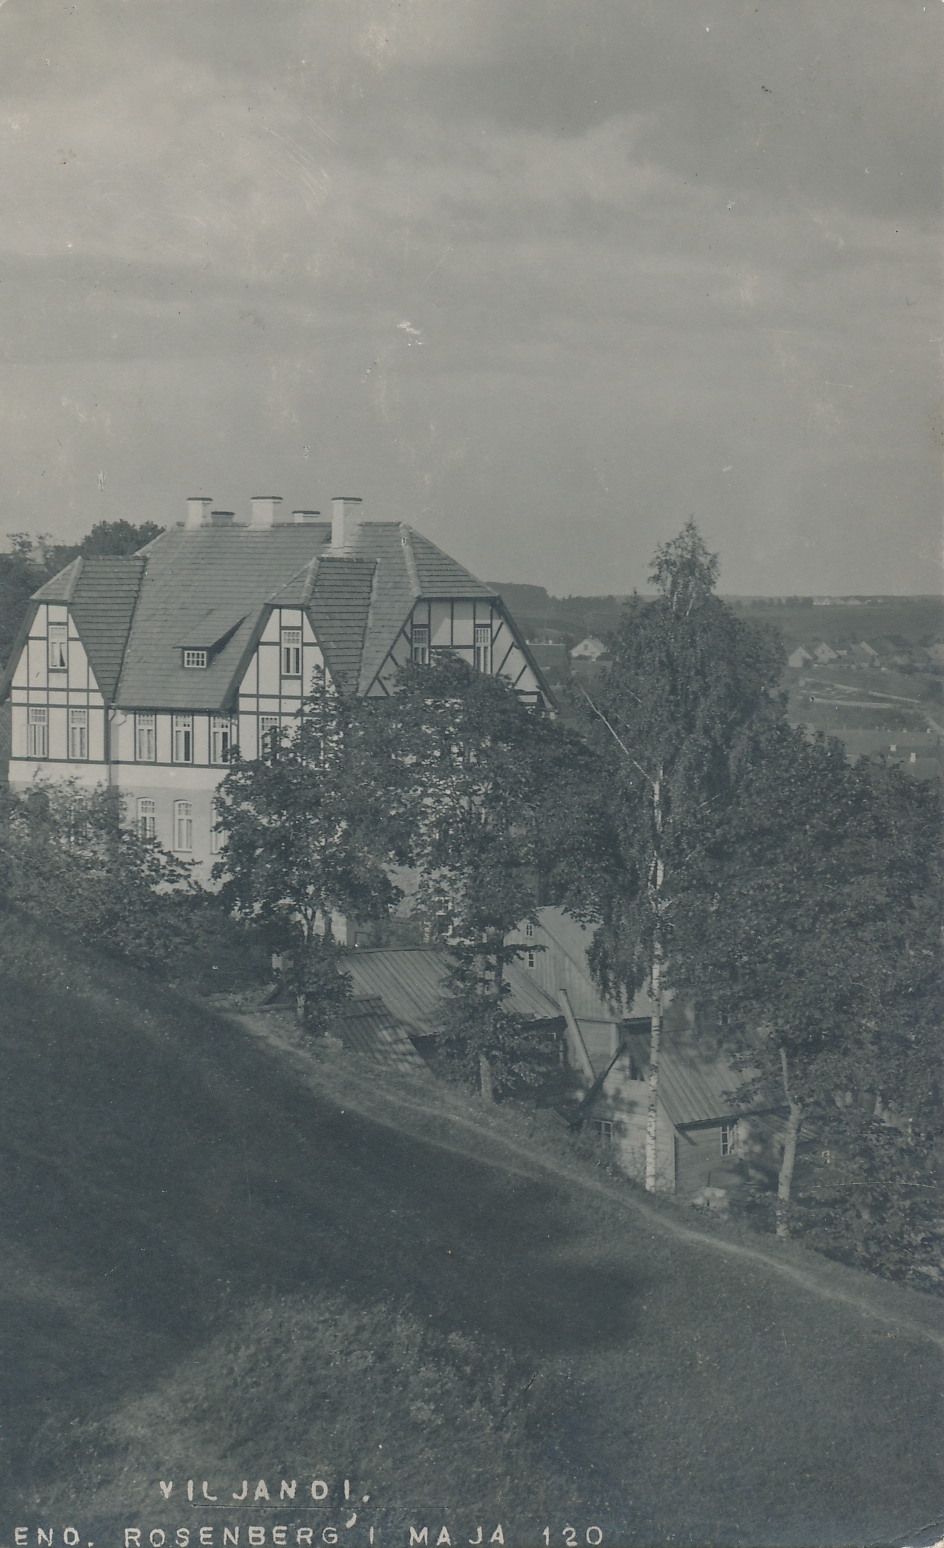 foto Viljandi, Pikk tn 33, G. Rosenberg'i maja u 1920 foto J.Riet